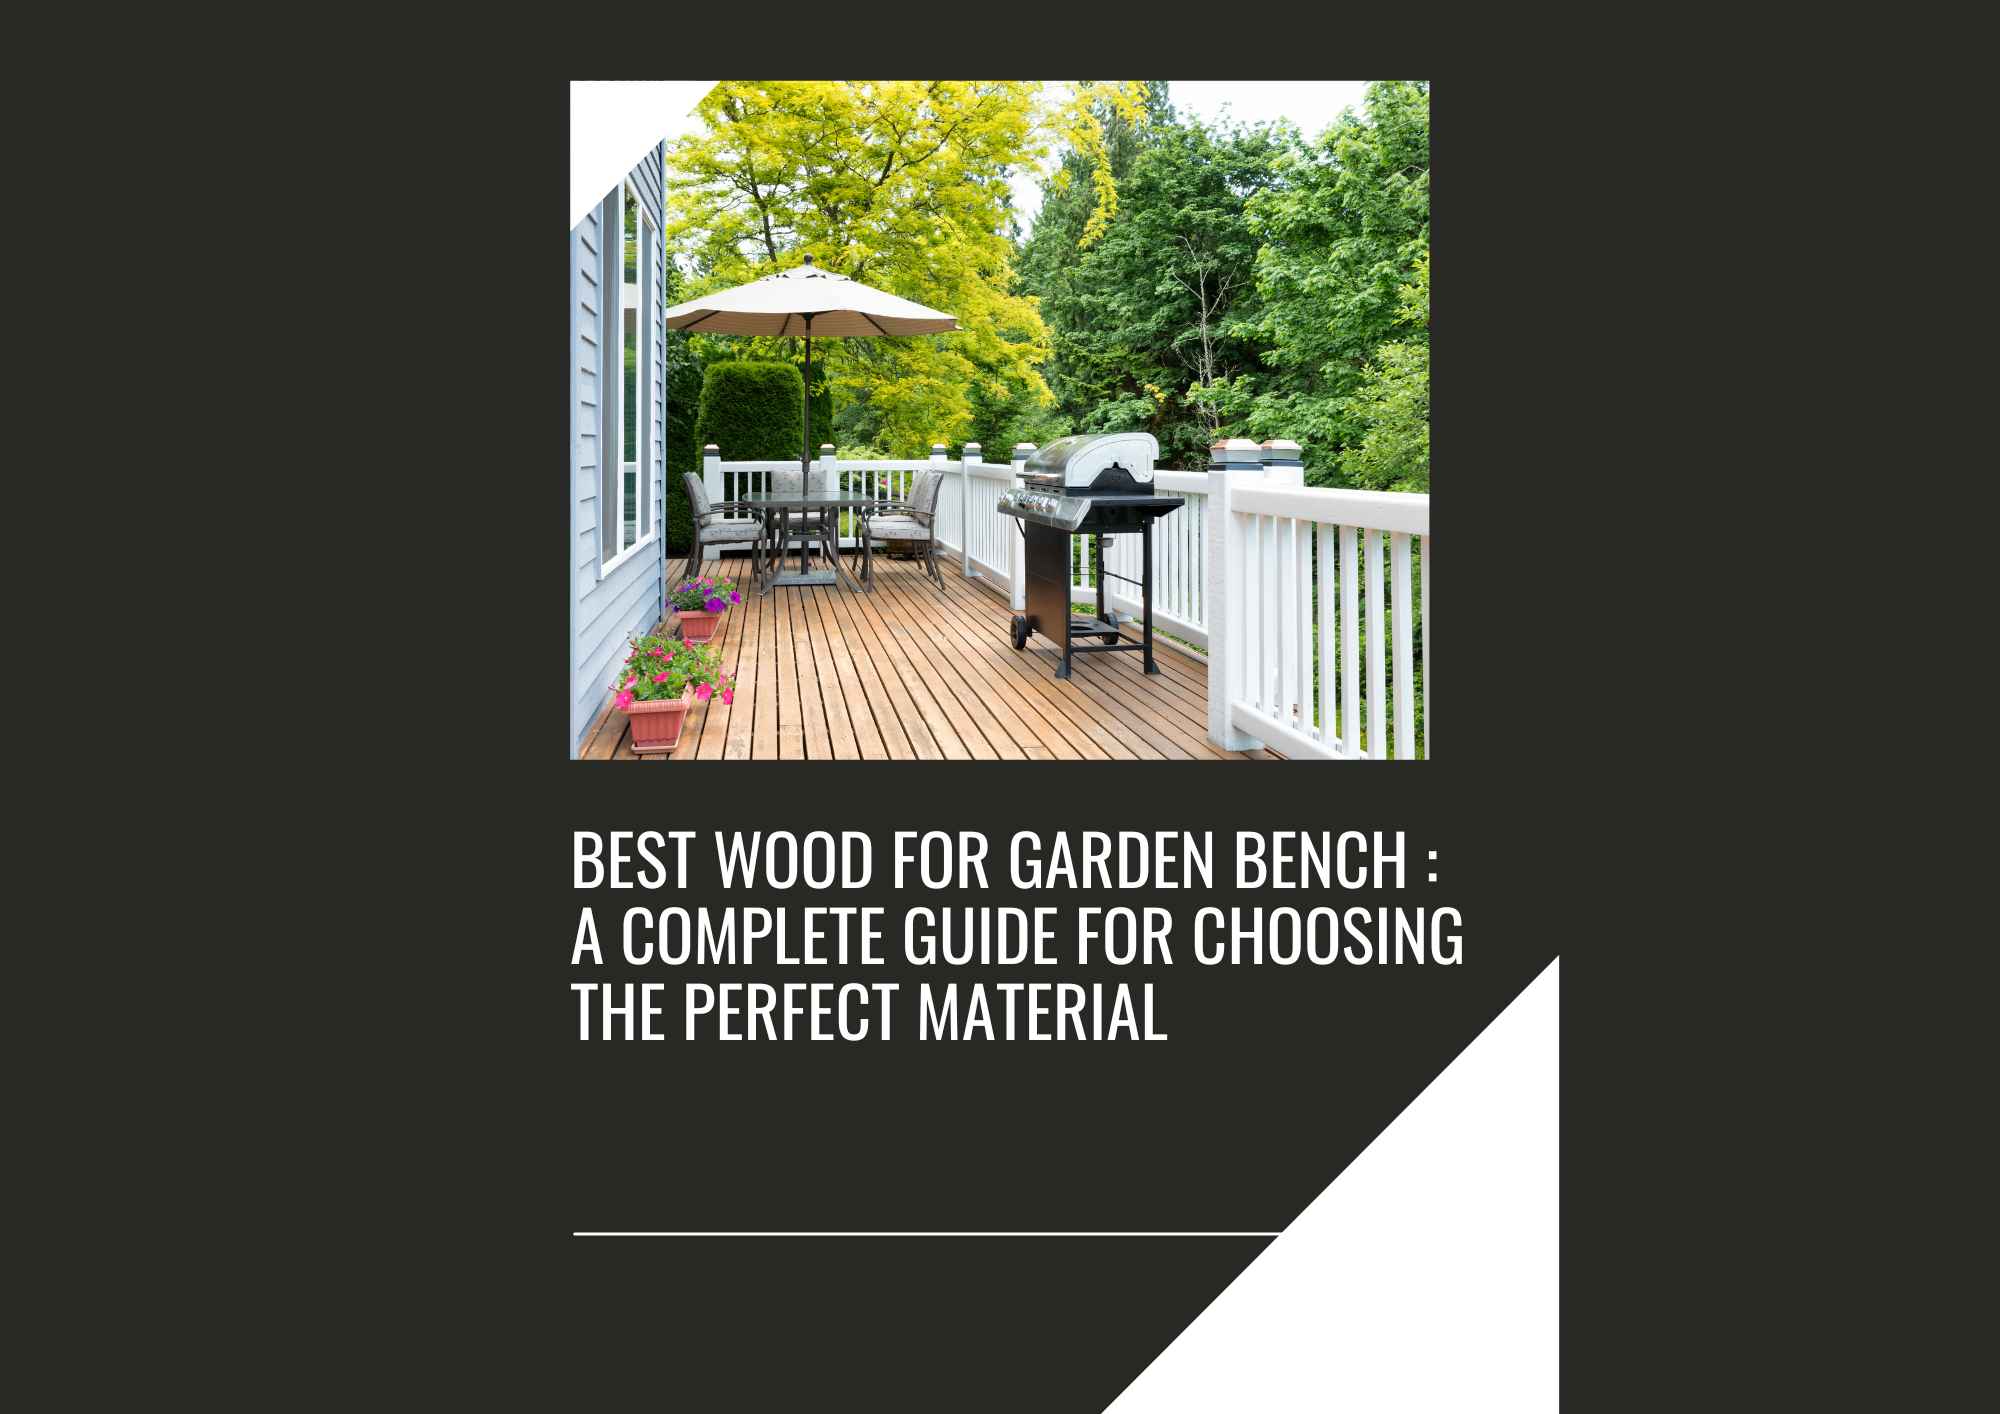 Best Wood for Garden Bench